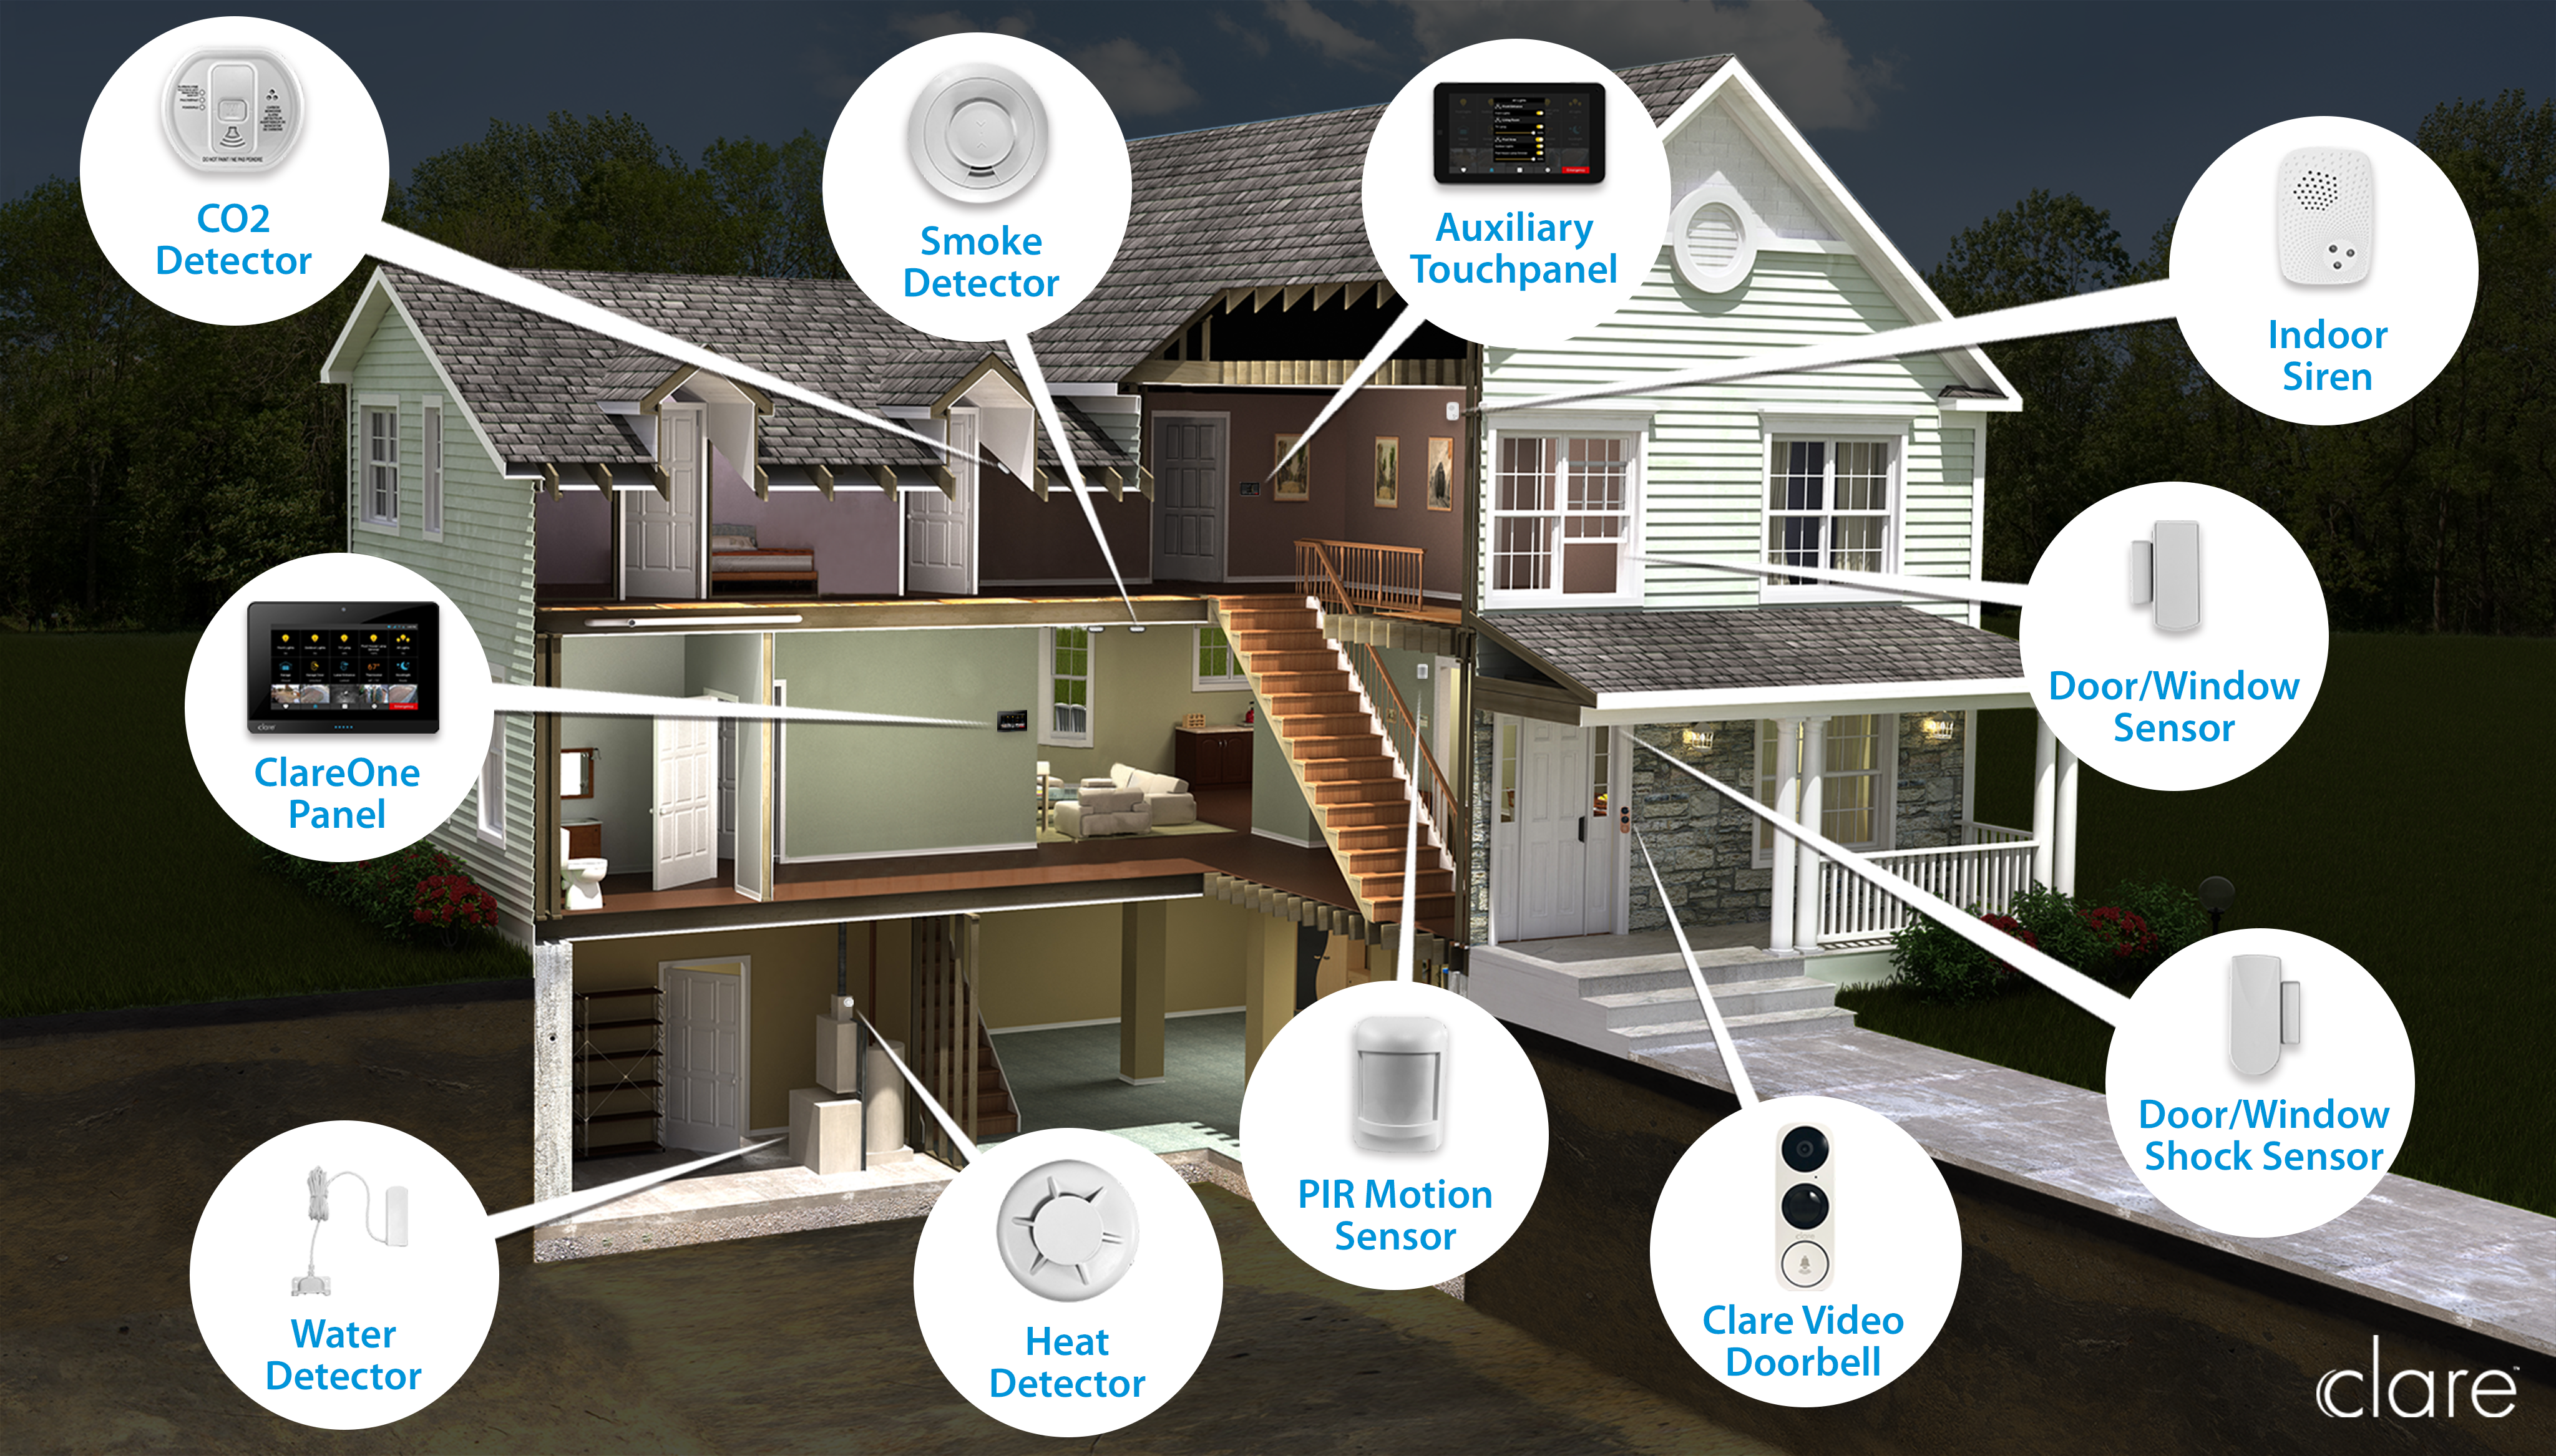 ClareOne smart tech setup across a house with access control control, smoke detectors, door/window sensor